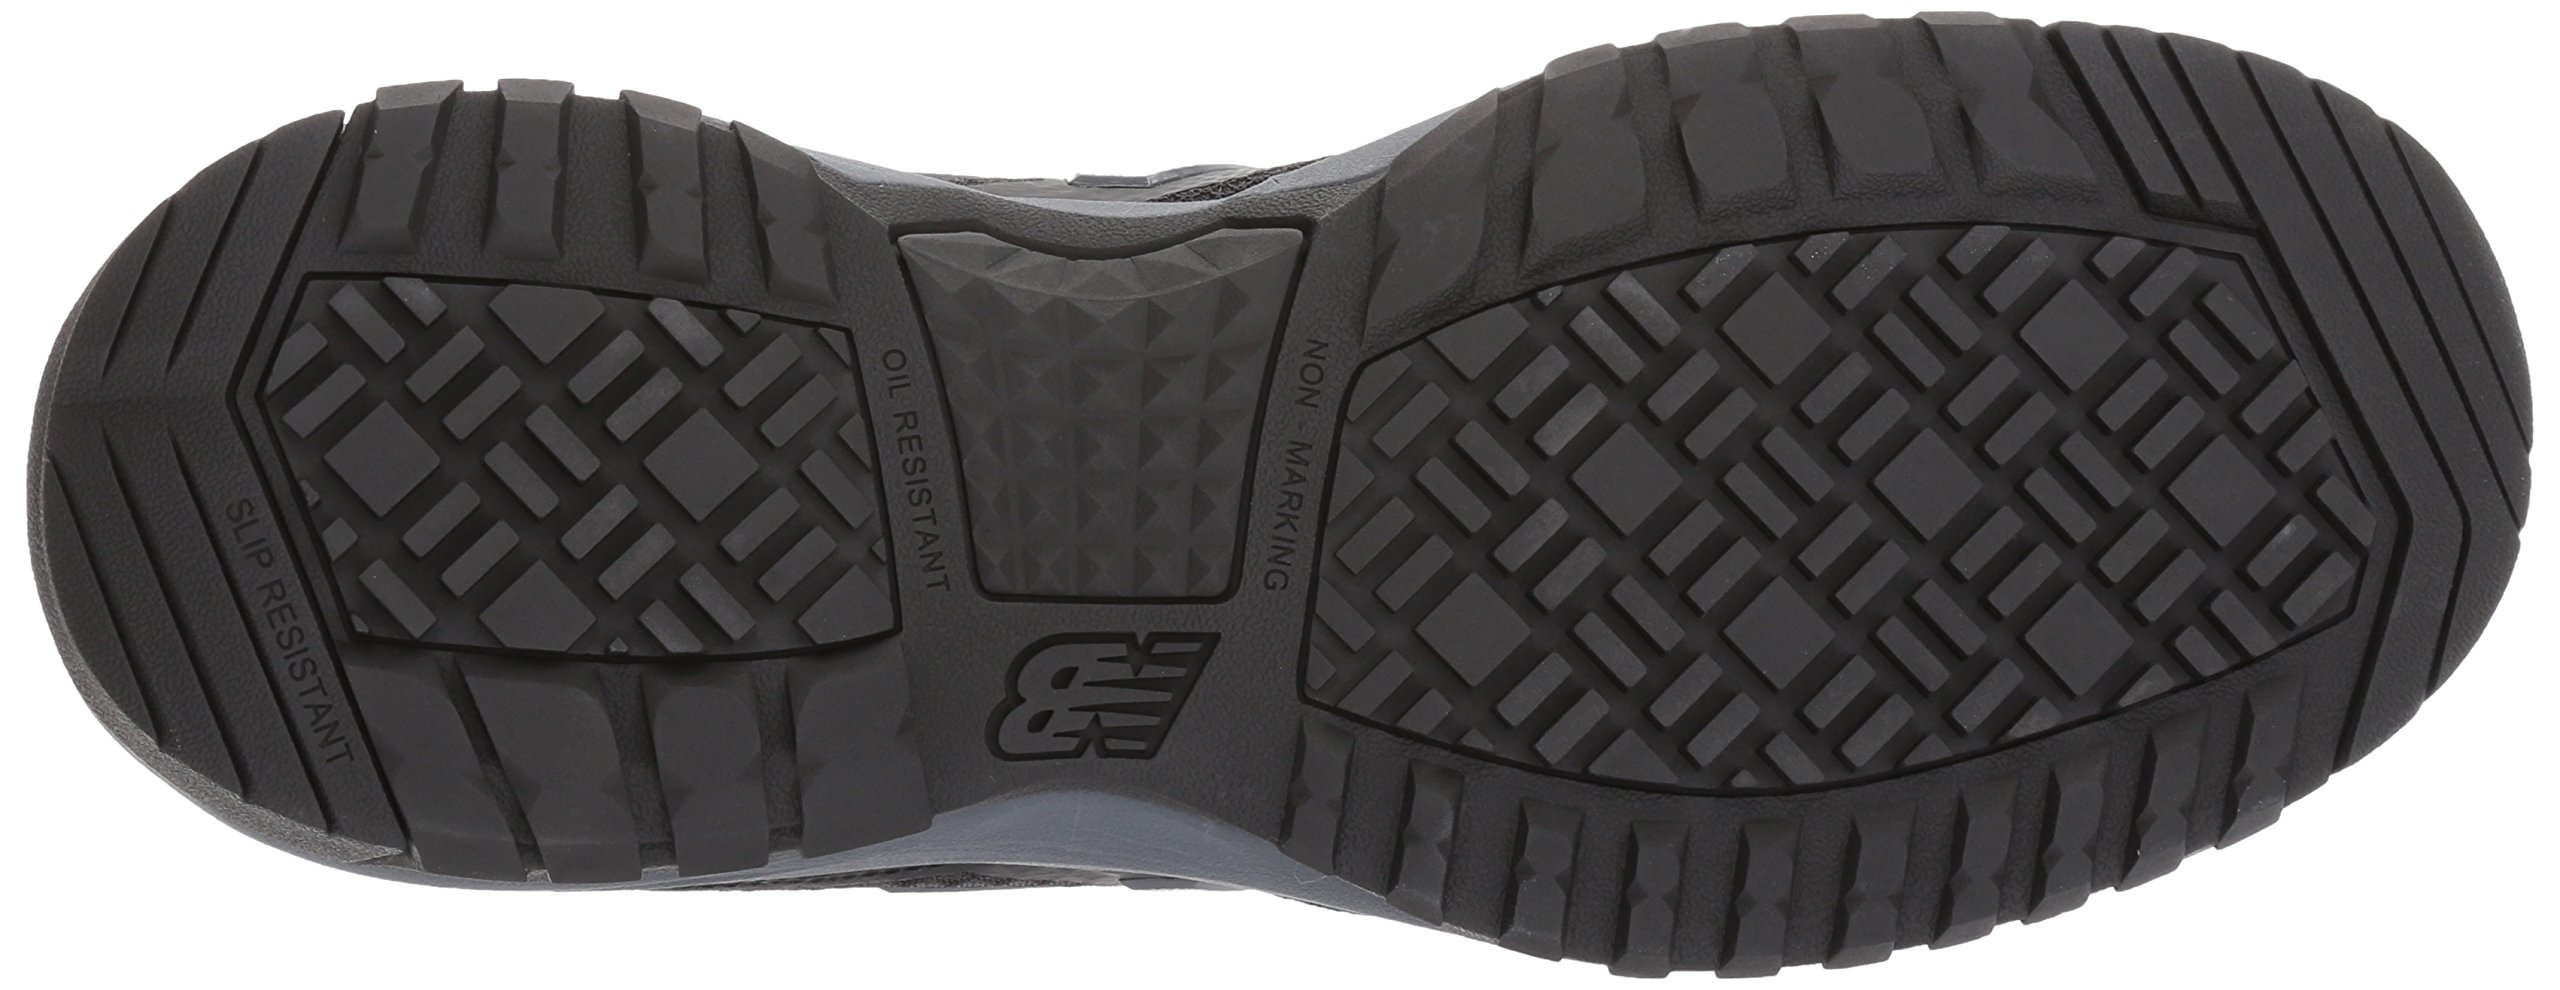 New Balance Men's Composite Toe 589 V1 Industrial Shoe